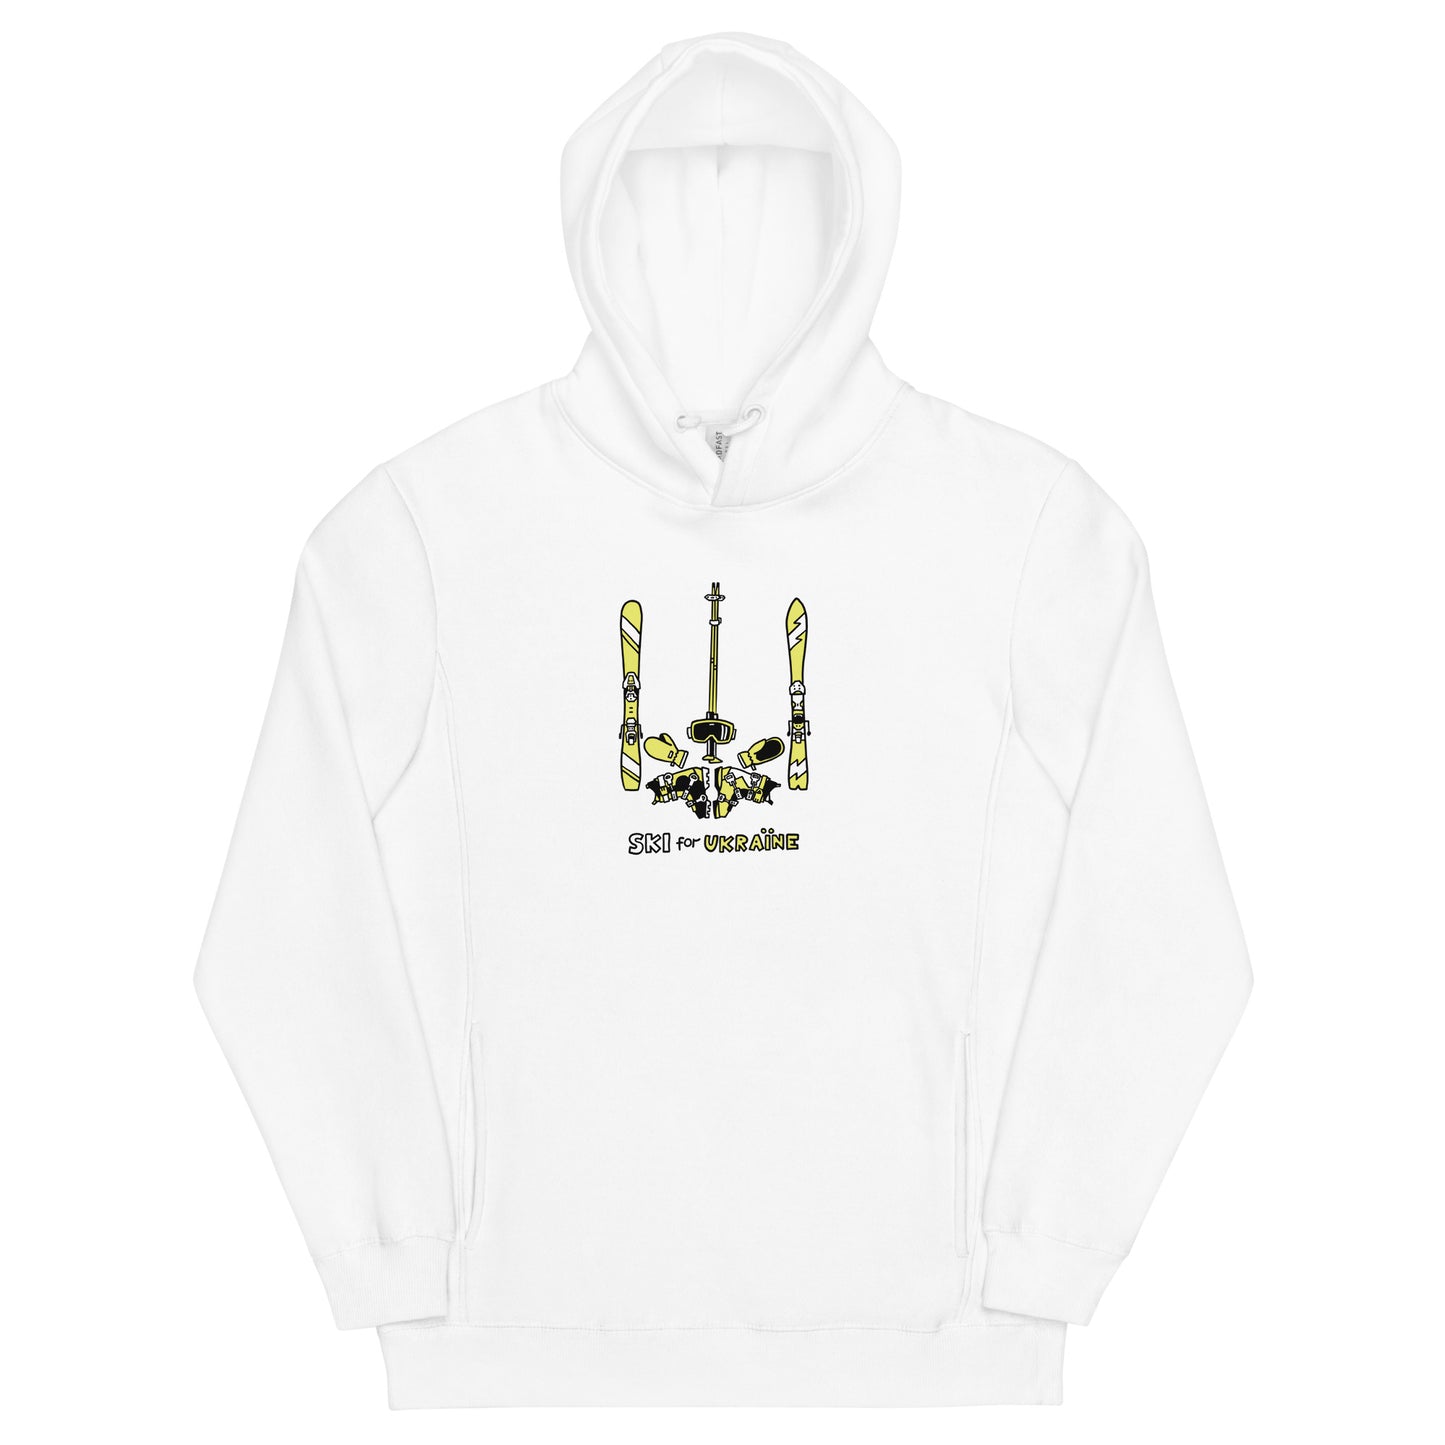 SKI for Ukraine - Unisex fashion hoodie